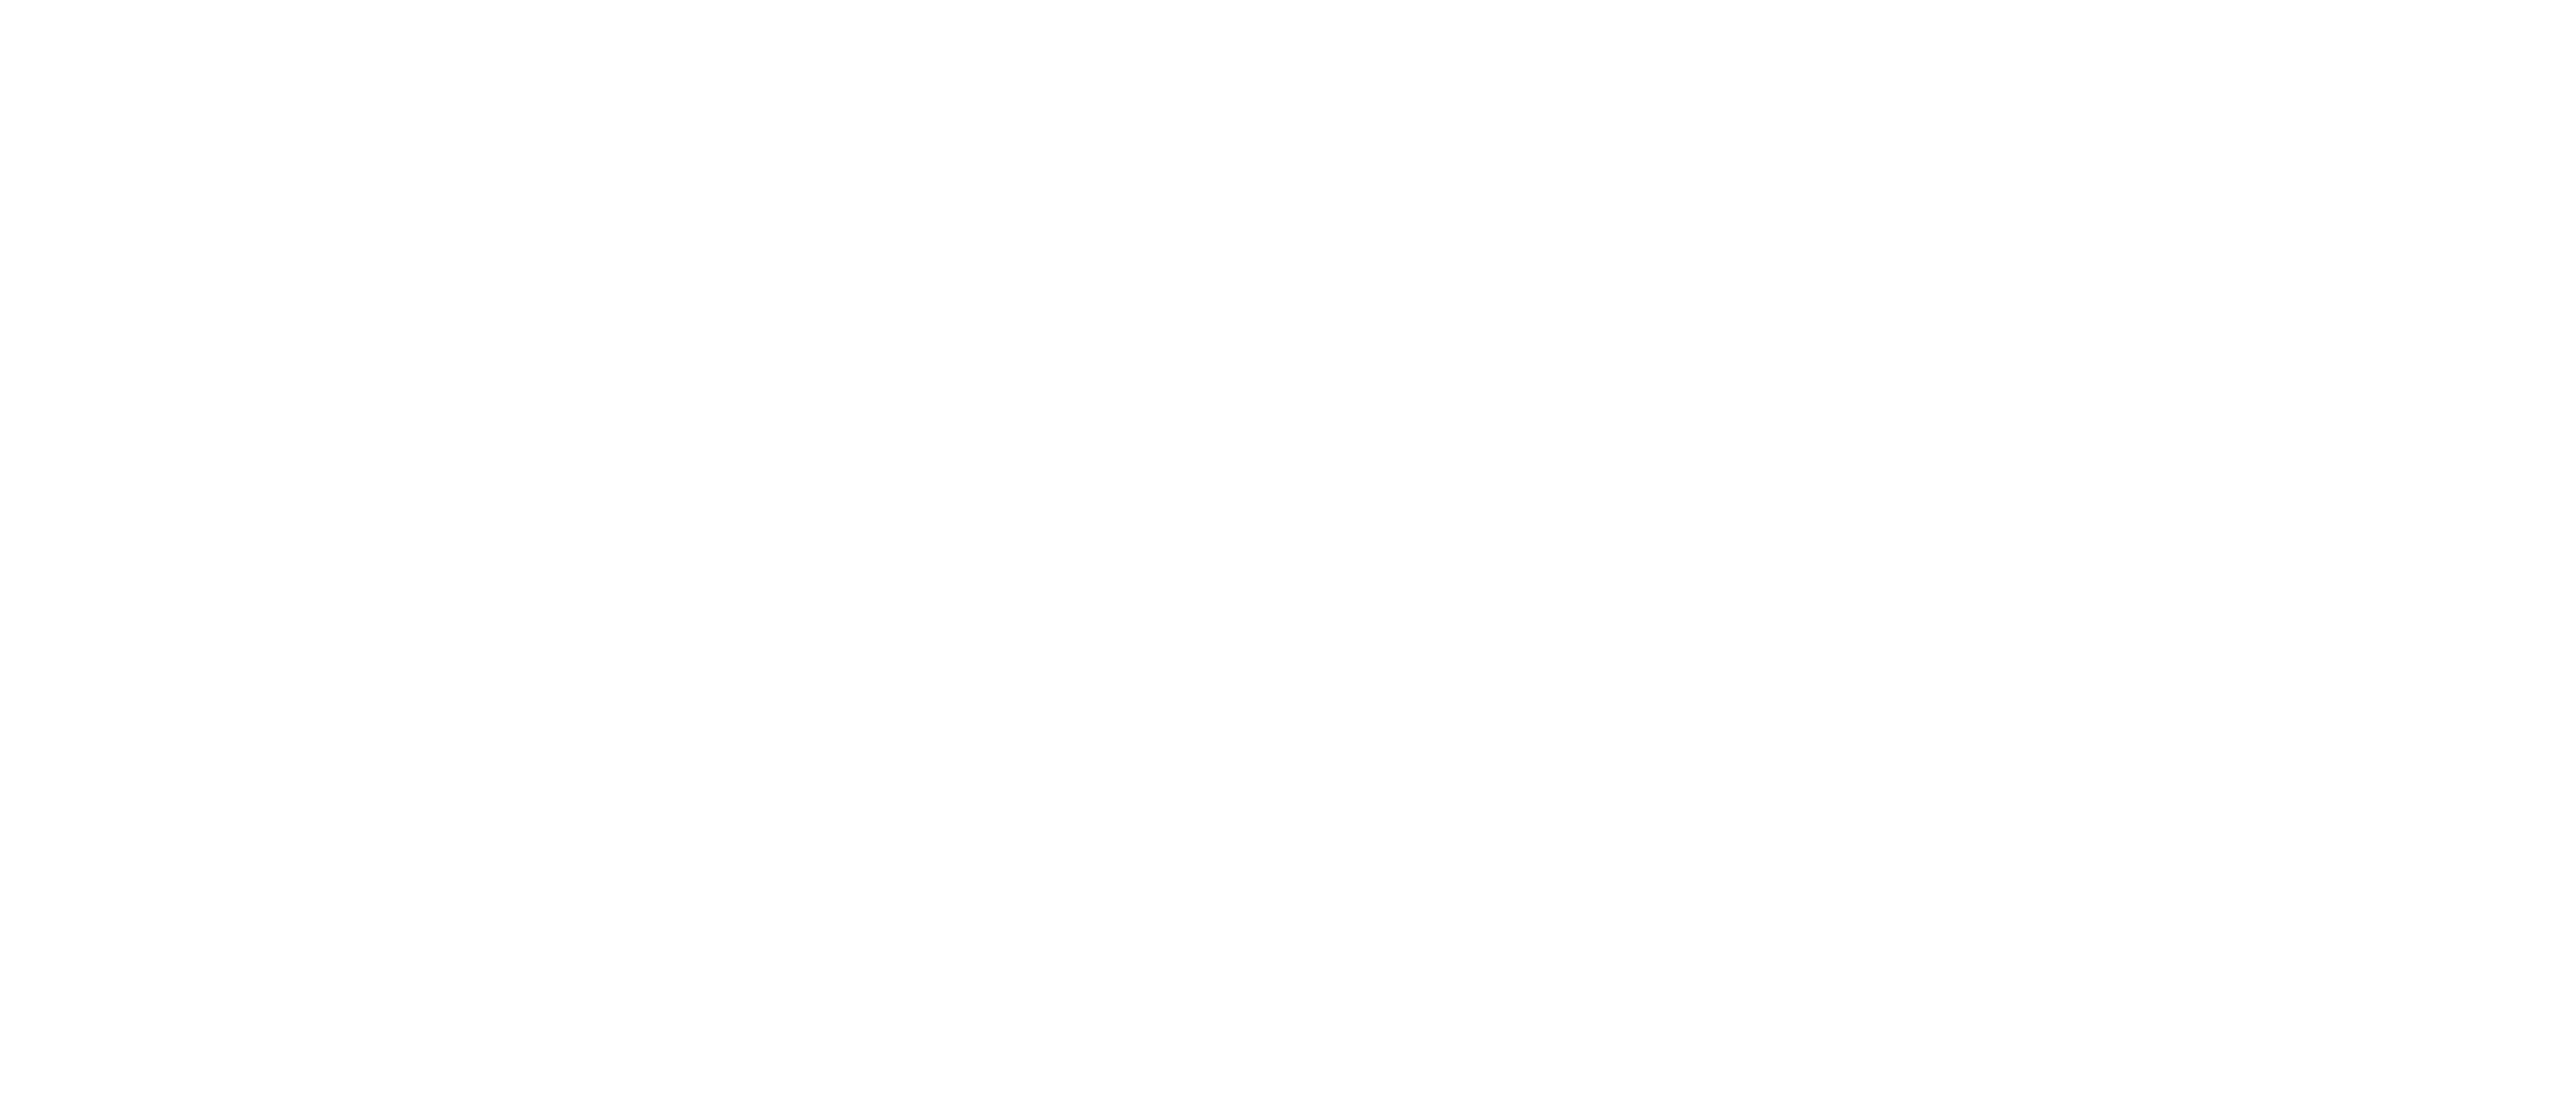 Champagne jazz Series Logo 2023